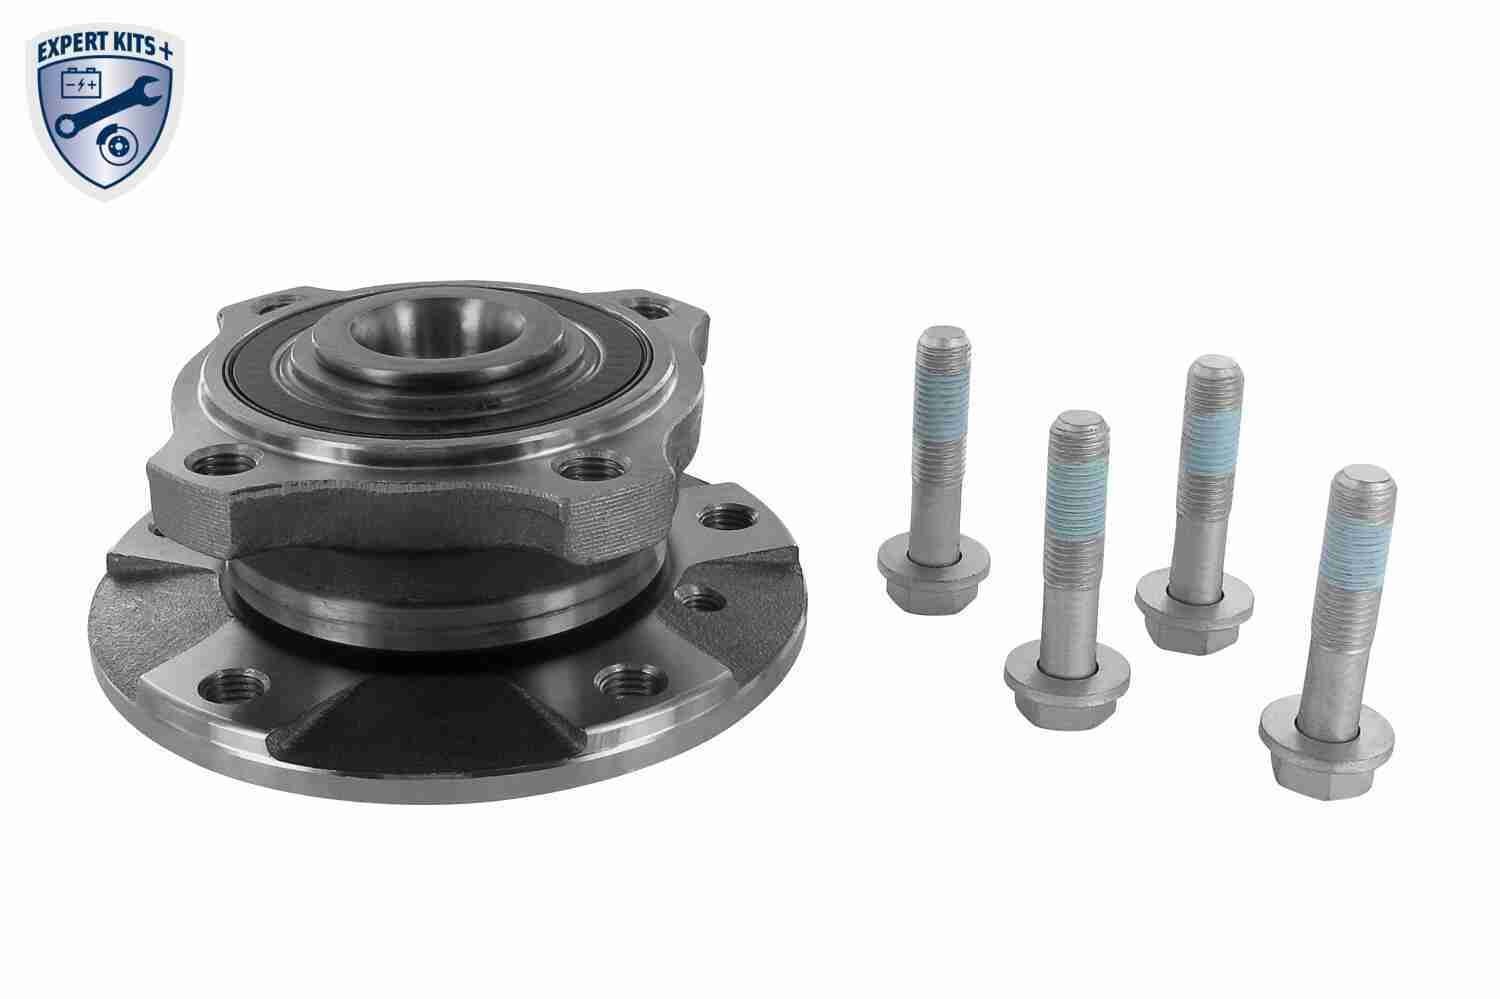 VAICO Front Axle, EXPERT KITS +, with bolts/screws, 143 mm Inner Diameter: 26mm Wheel hub bearing V20-0682 buy